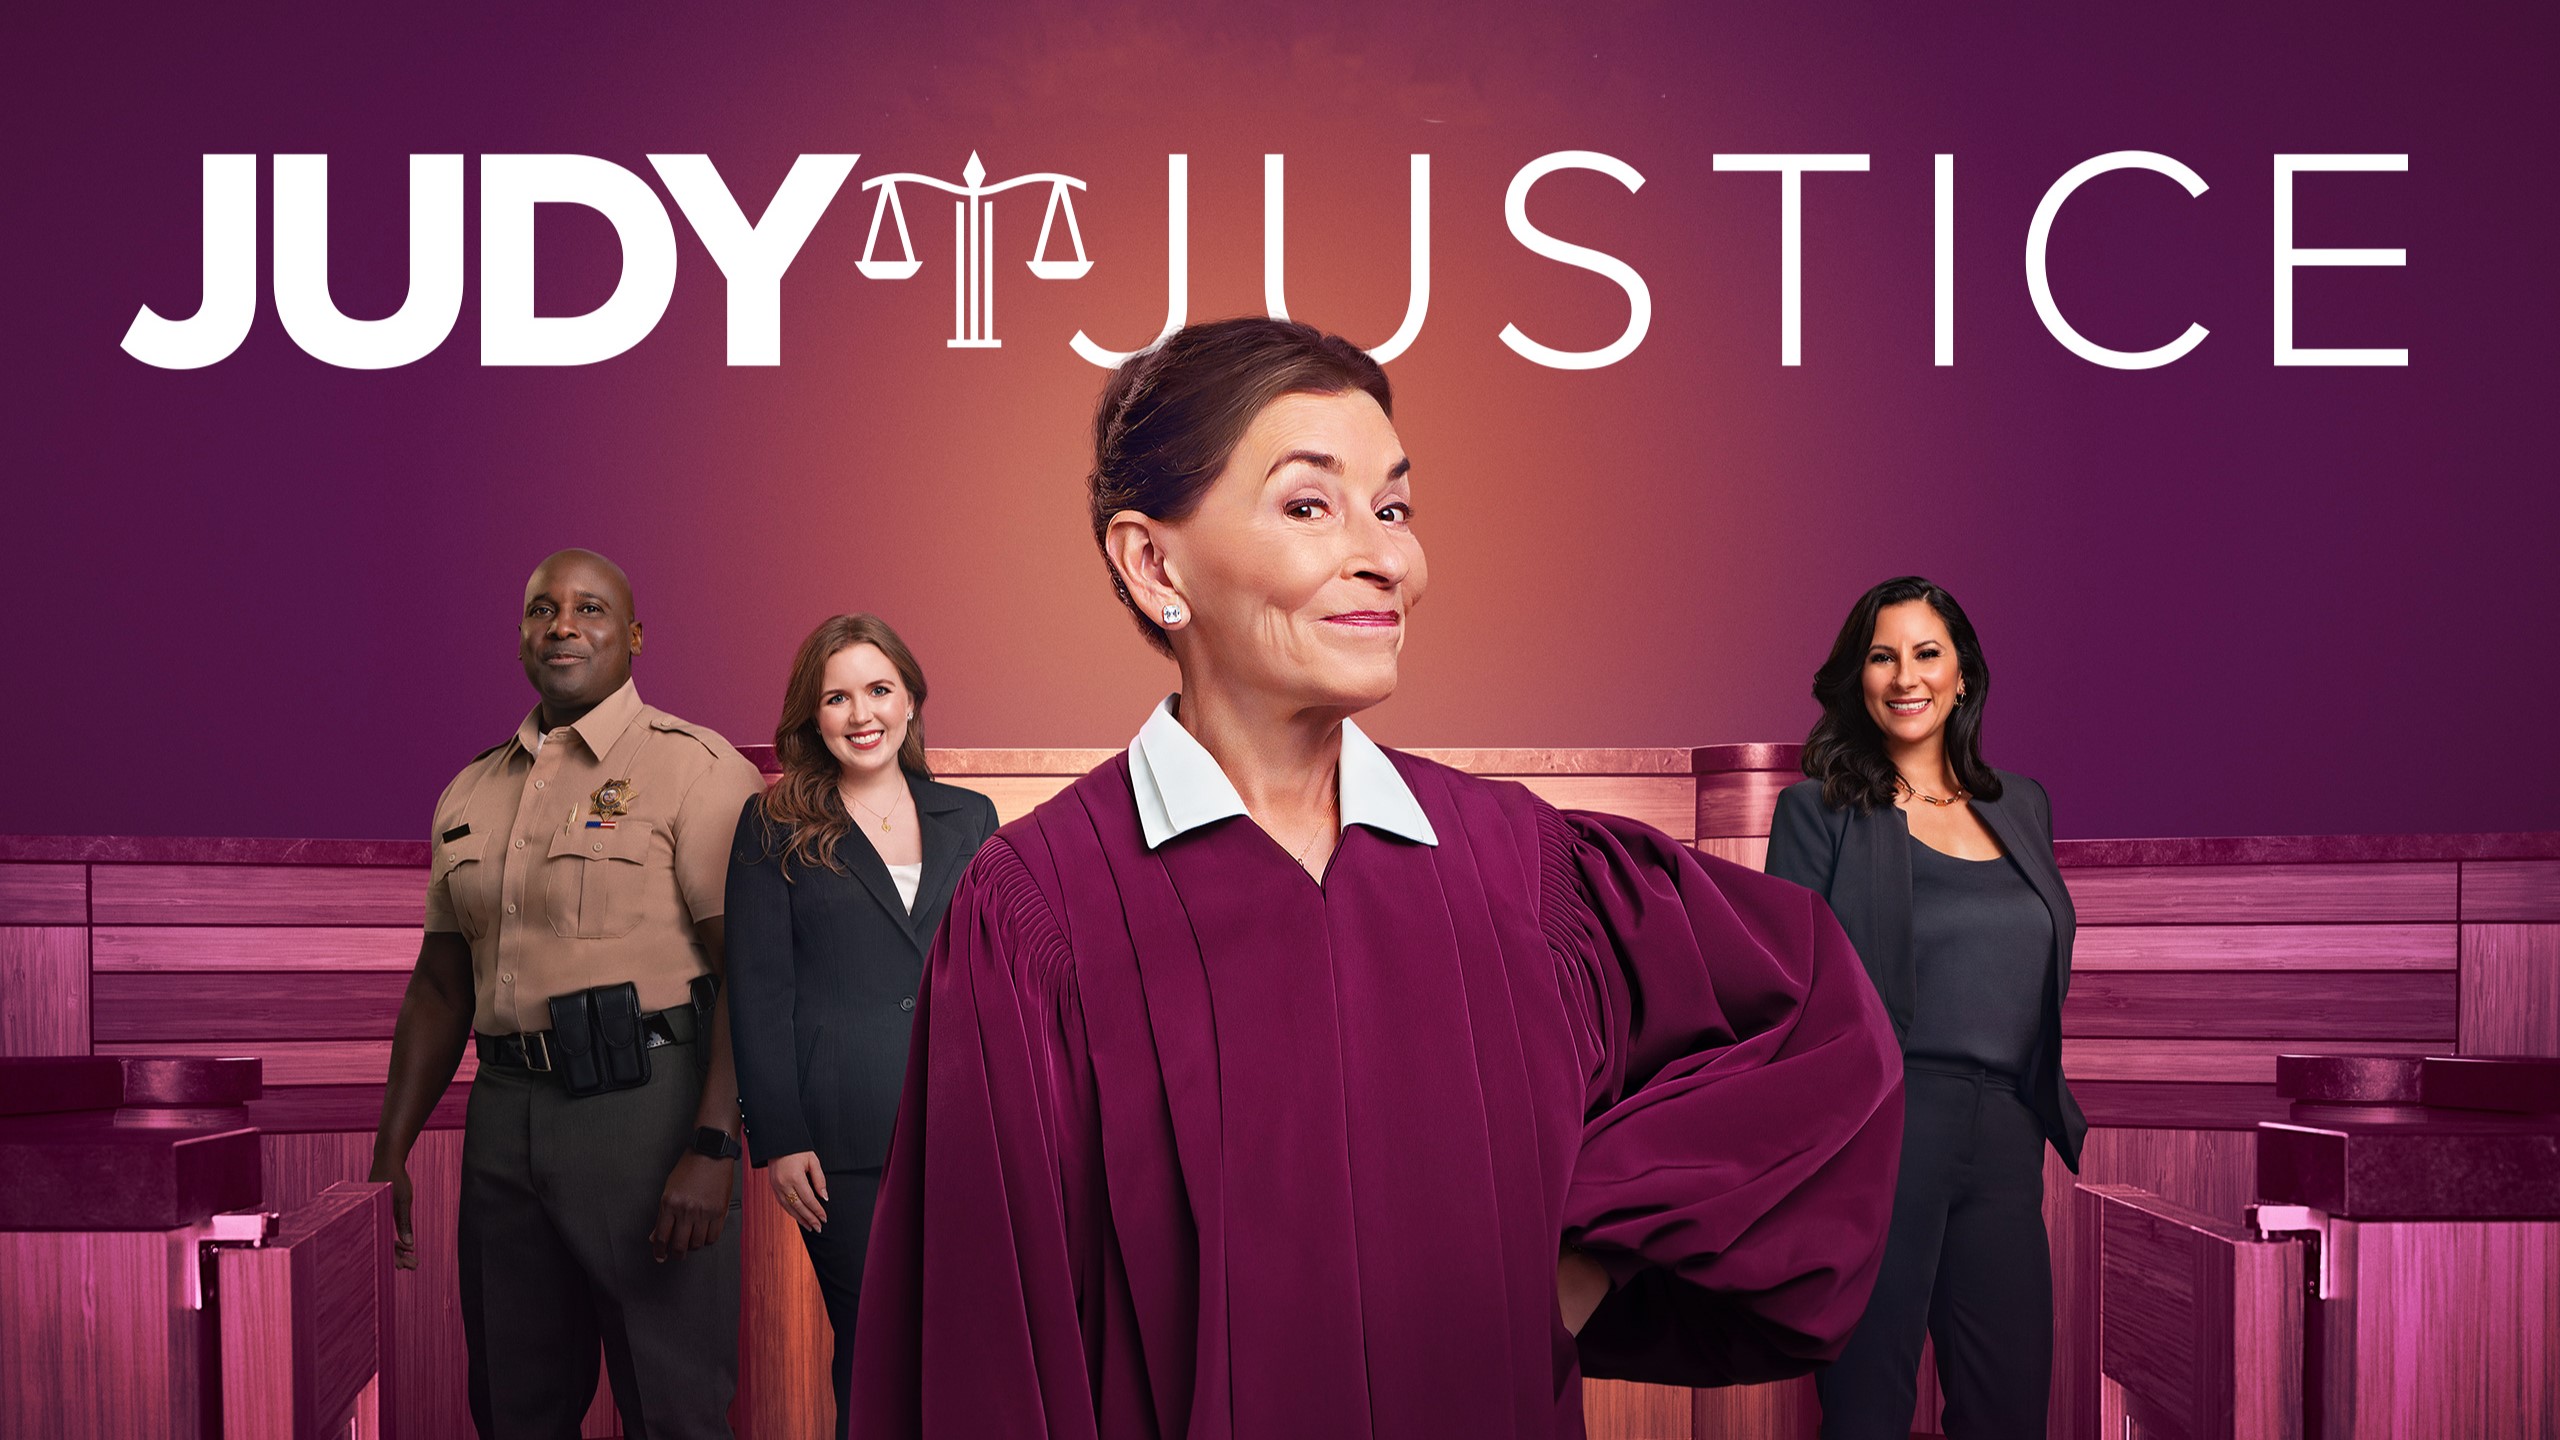 Judy Justice Season 4